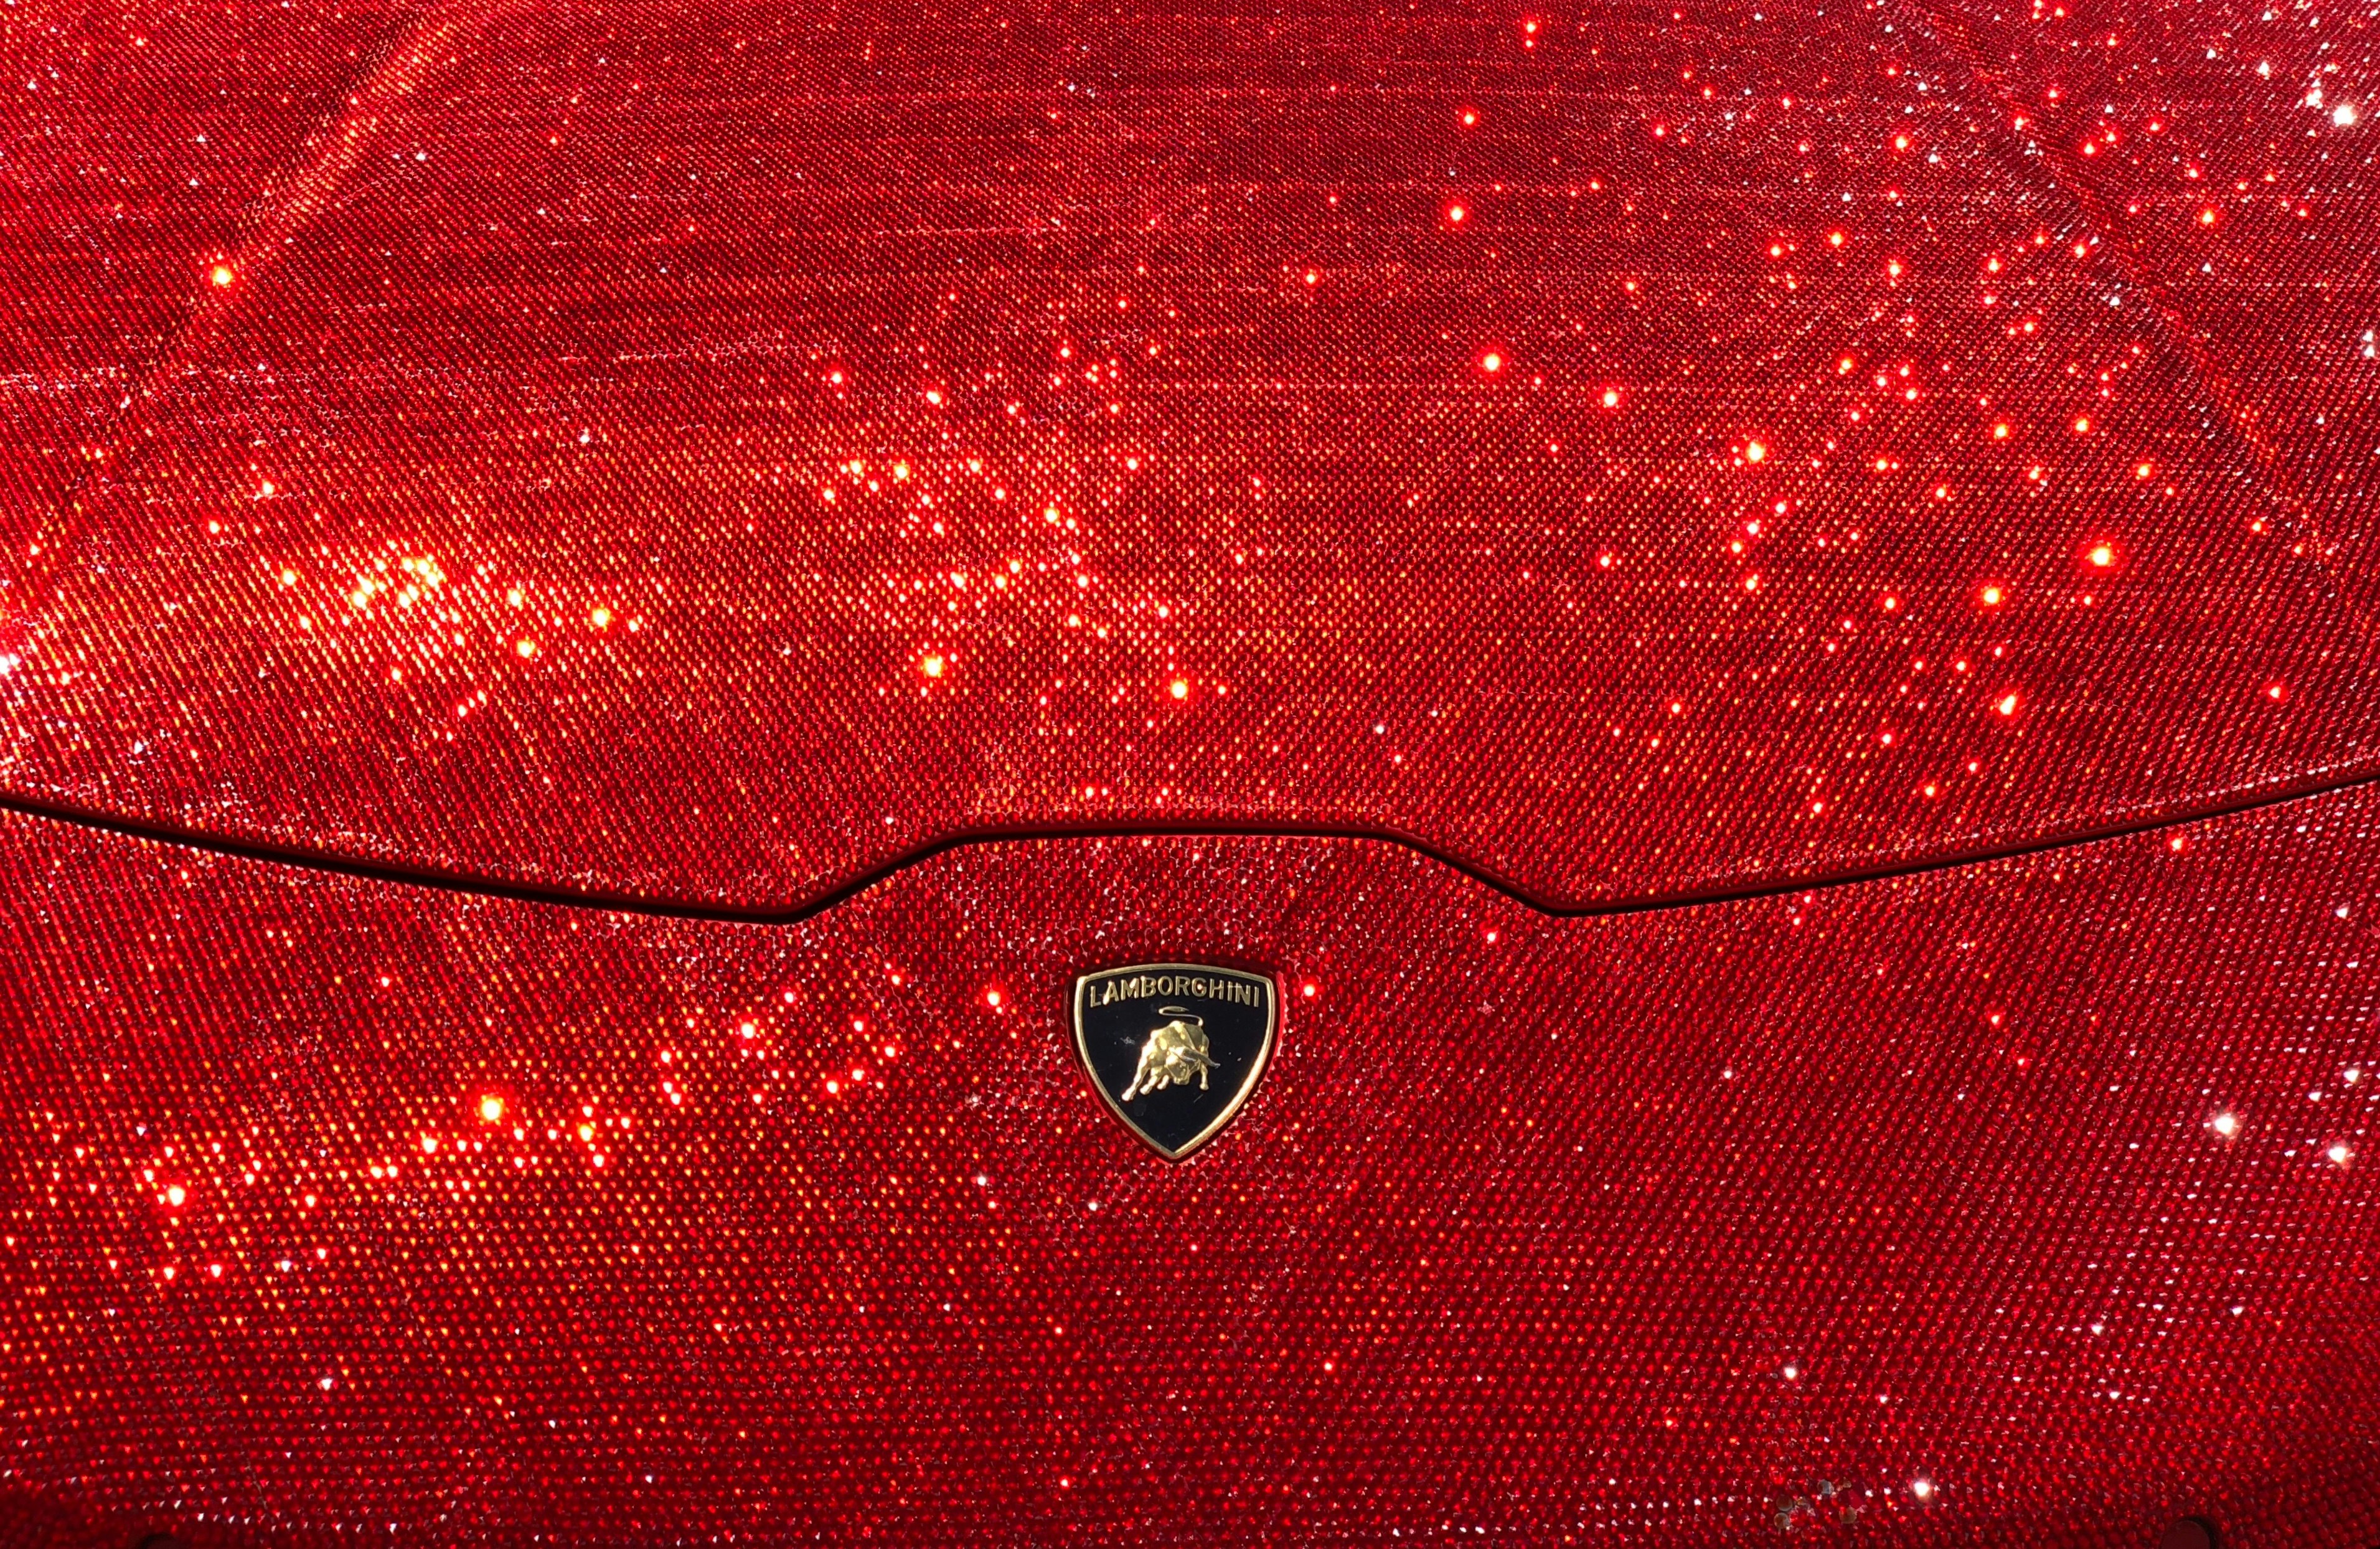 gold Lamborghini emblem